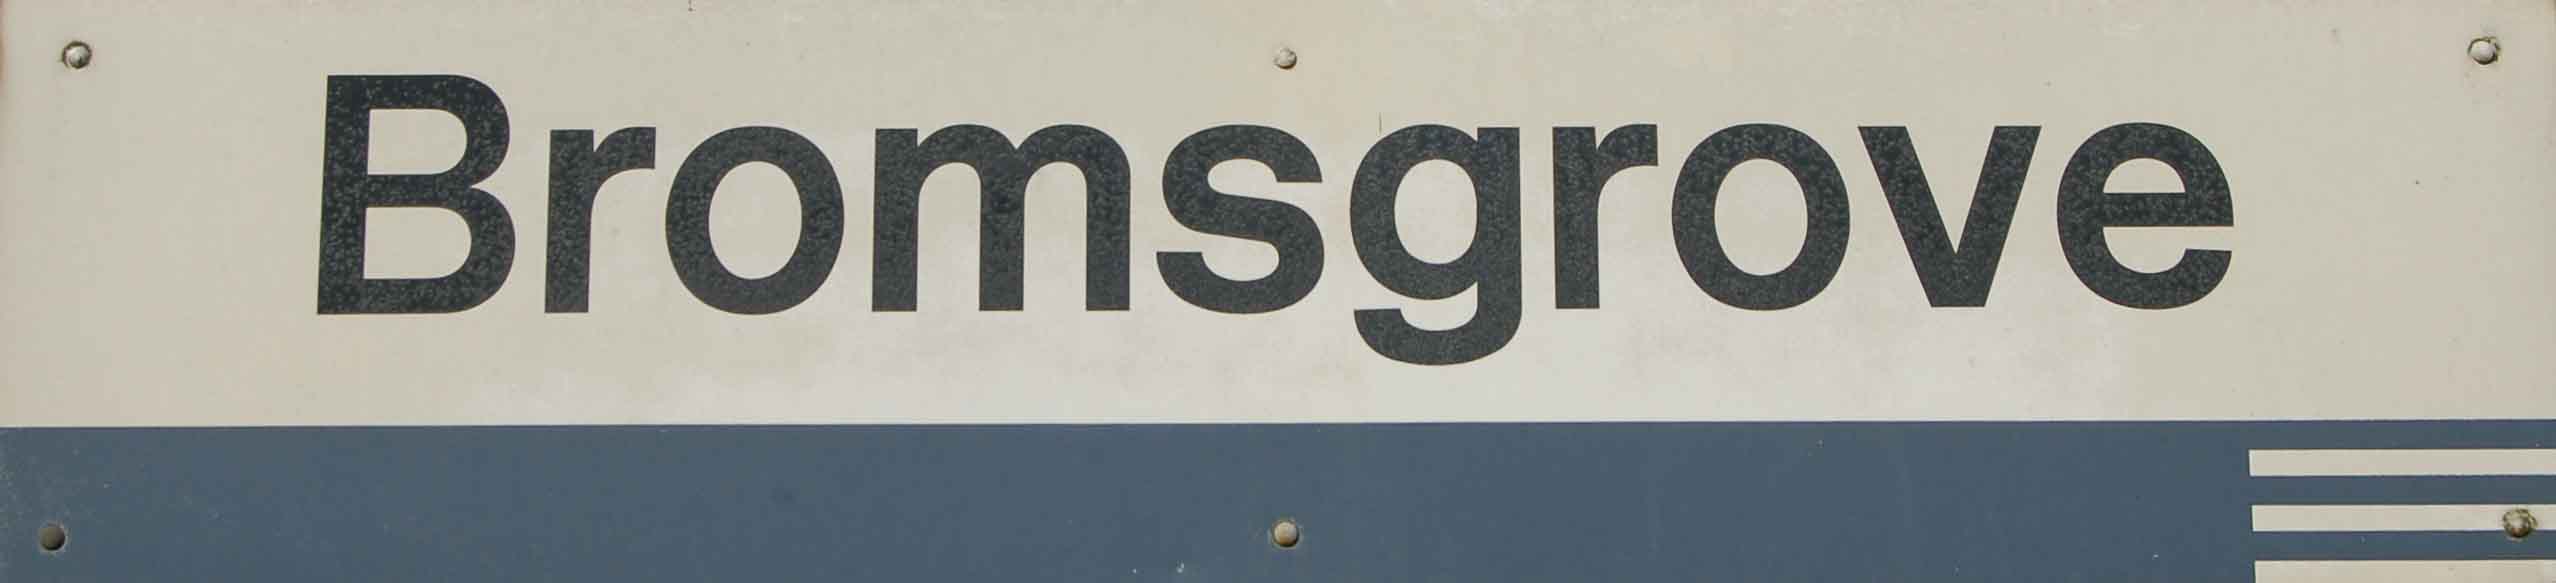 Bromsgrove Station sign